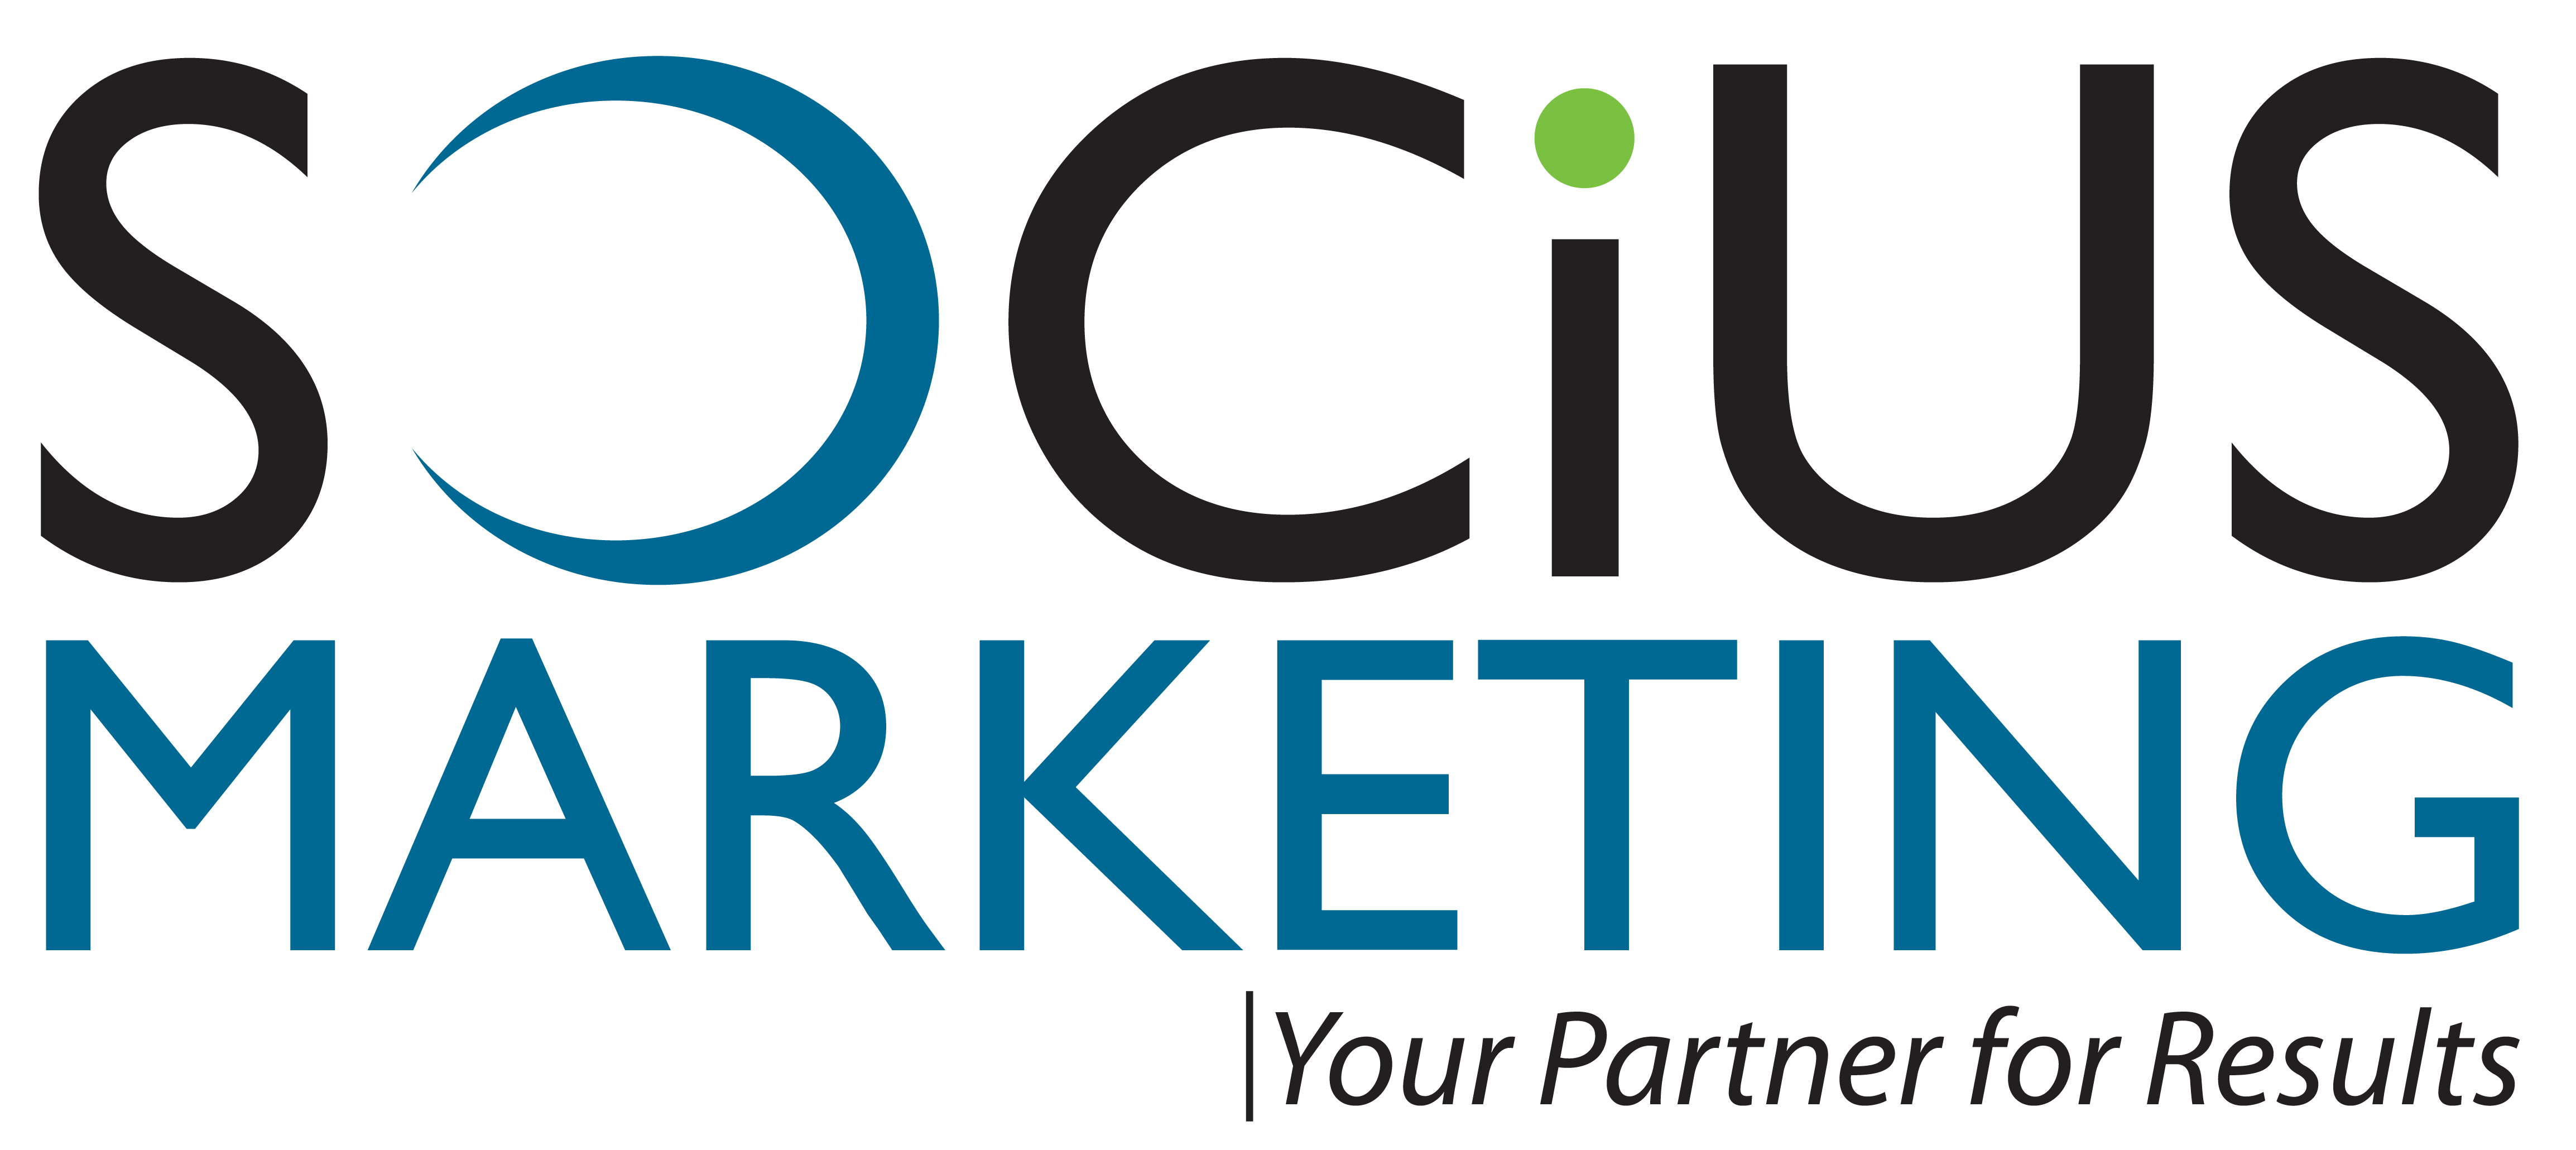 Best Remarketing Pay-Per-Click Business Logo: SociusMarketing